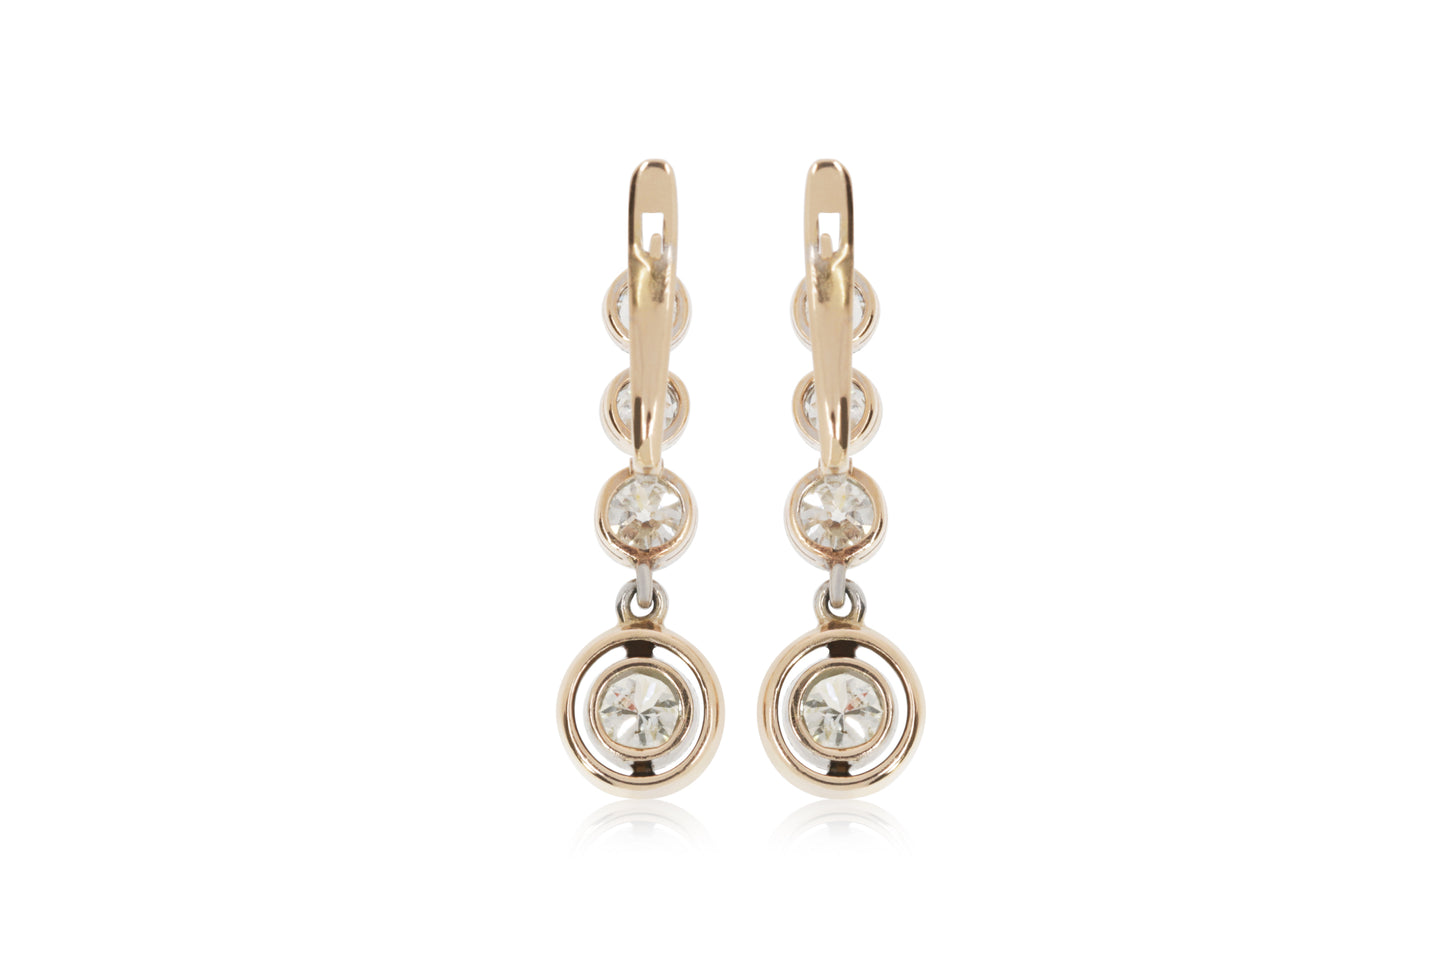 Platinum earrings